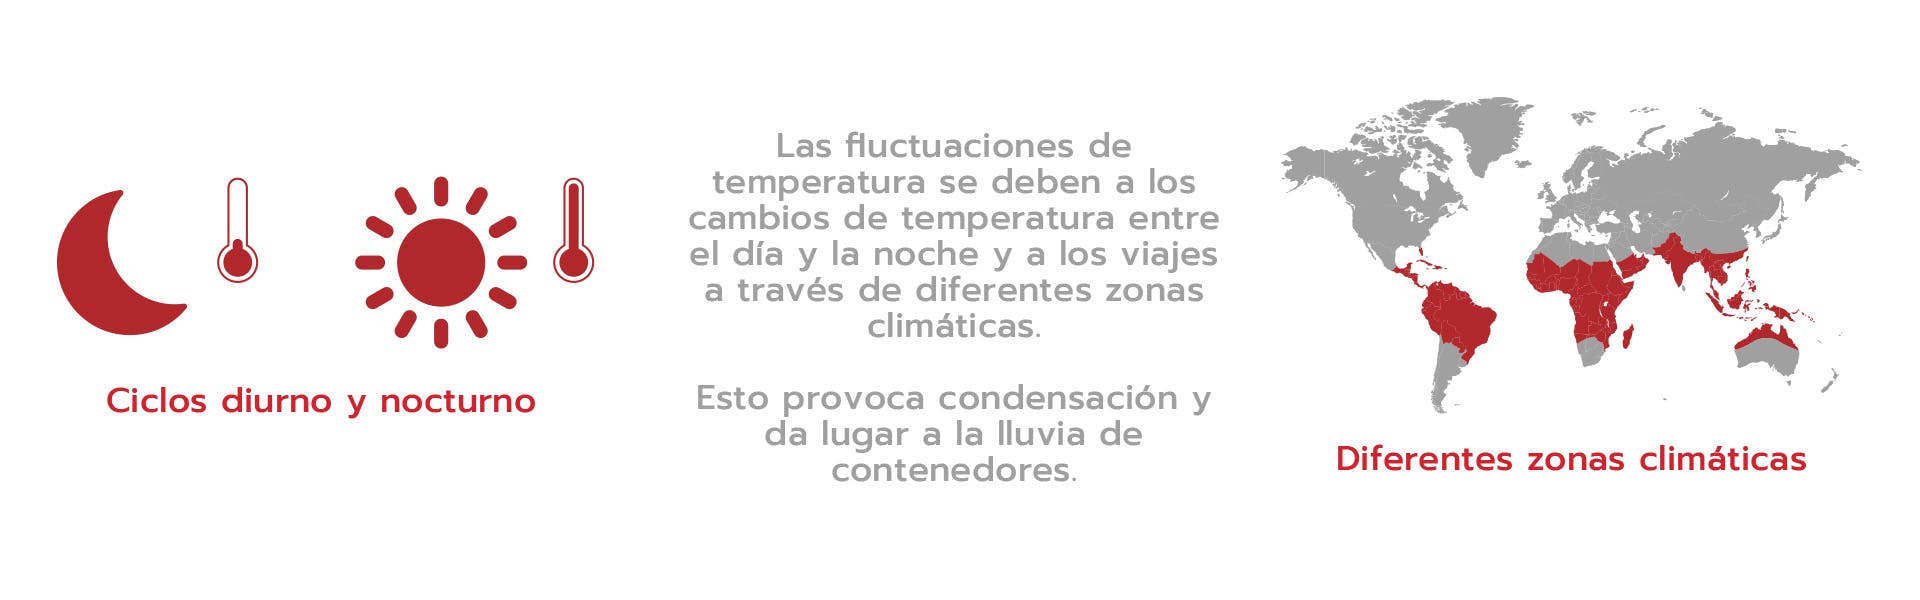 article image container rain description spanish language